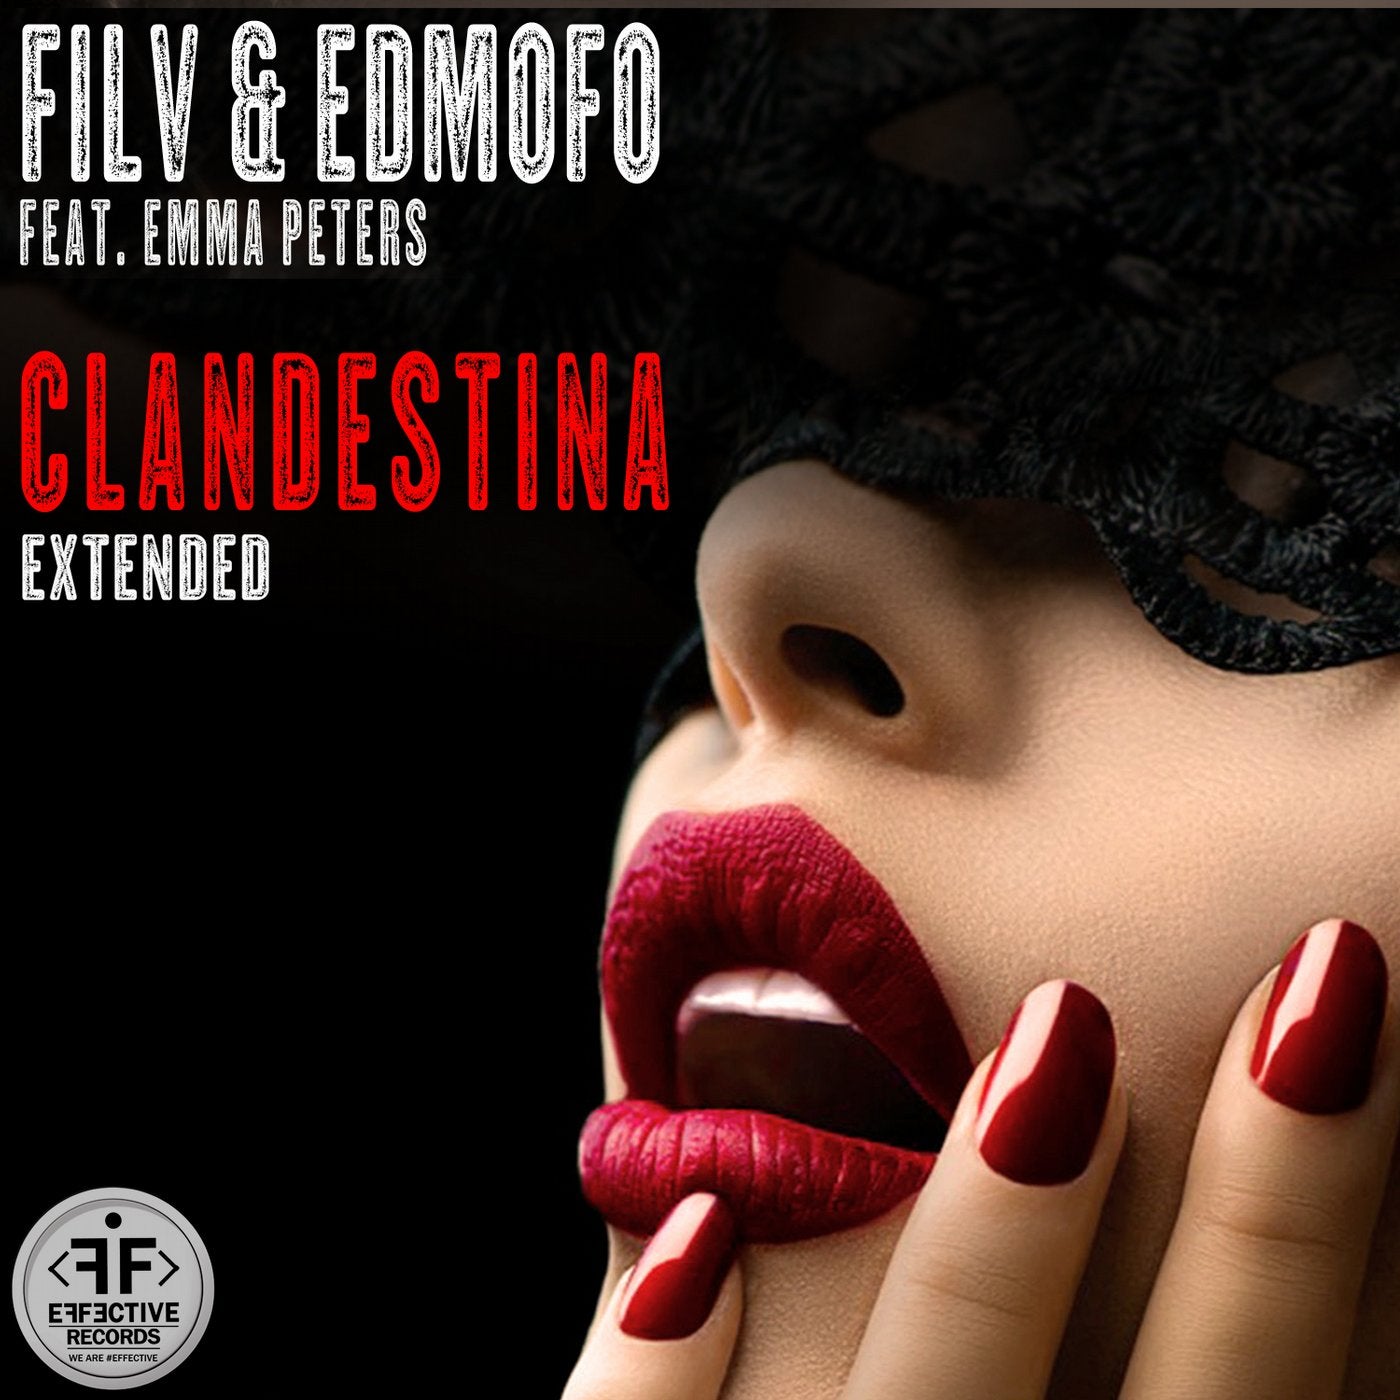 Fous edmofo remix. Clandestina [Extended] FILV, edmofo feat. Emma Peters. Edmofo. Edmofo Wake up. Clandestina (feat. Edmofo) [Jvstin Remix].